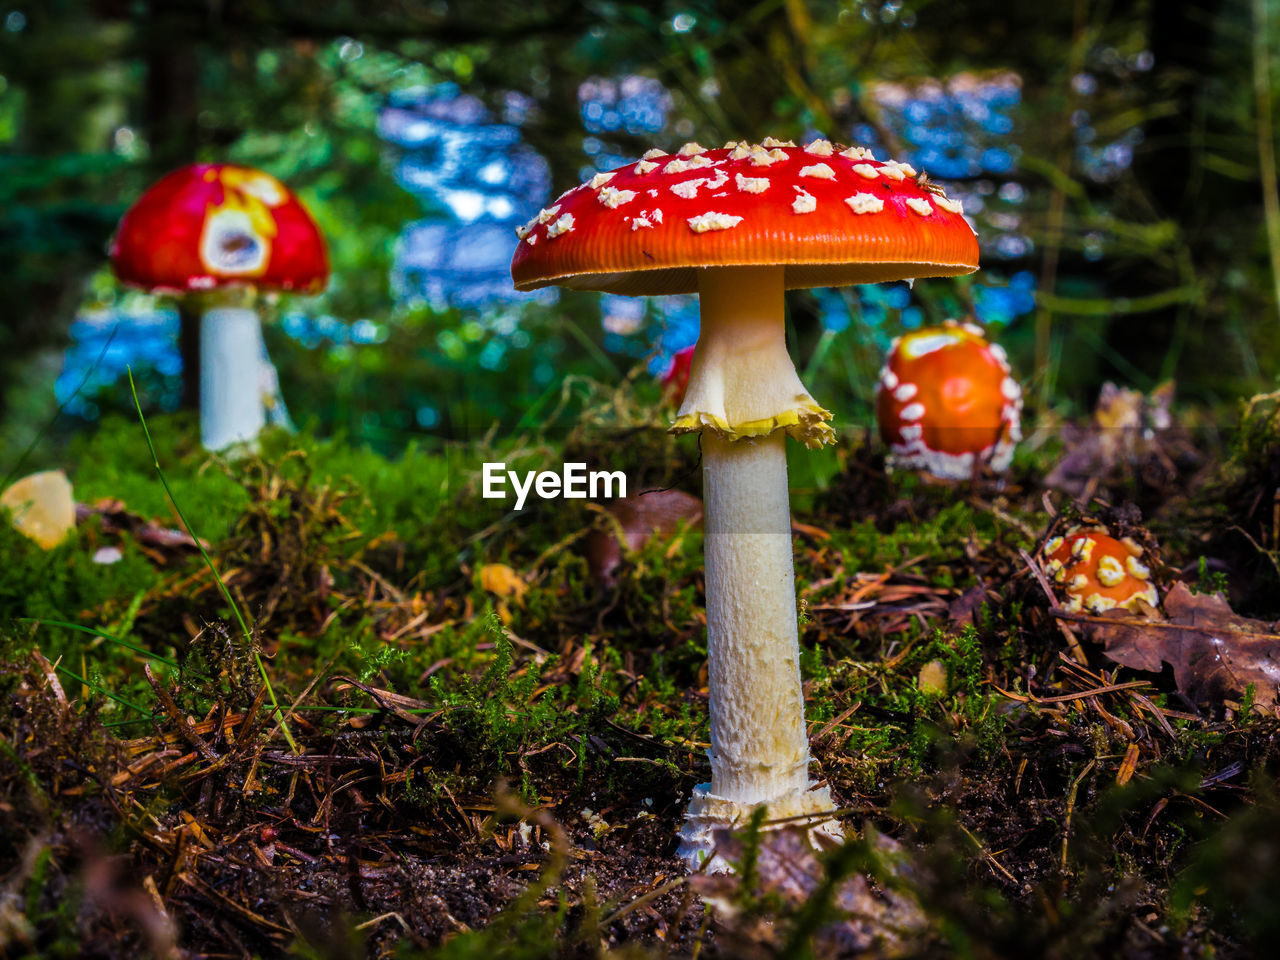 Close-up of mushroom growing on field